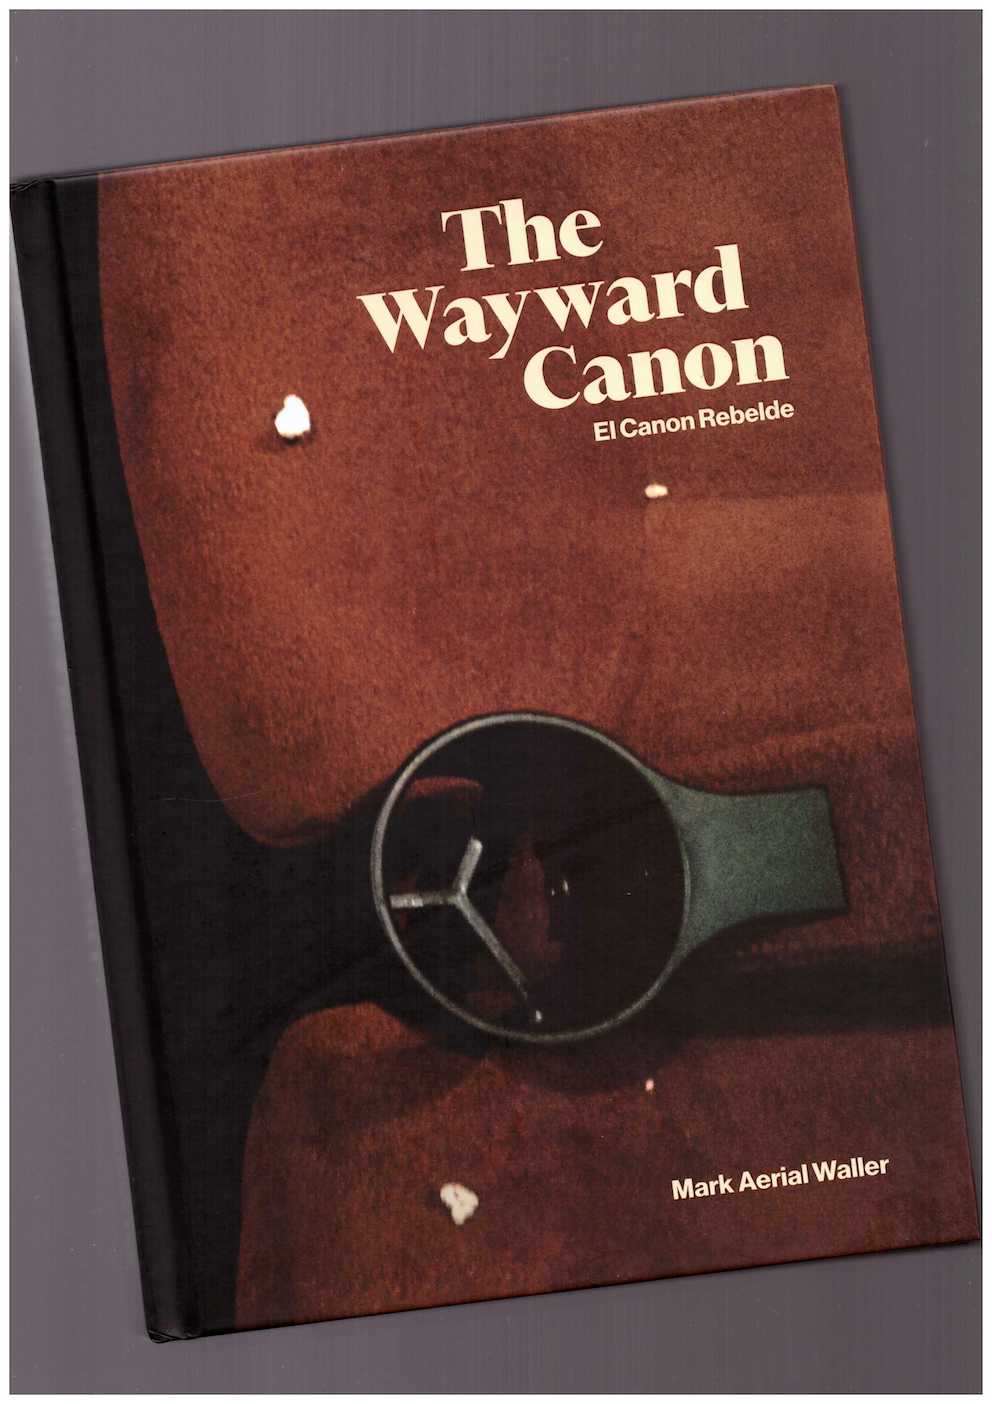 AERIAL WALLER, Mark - The Wayward Canon